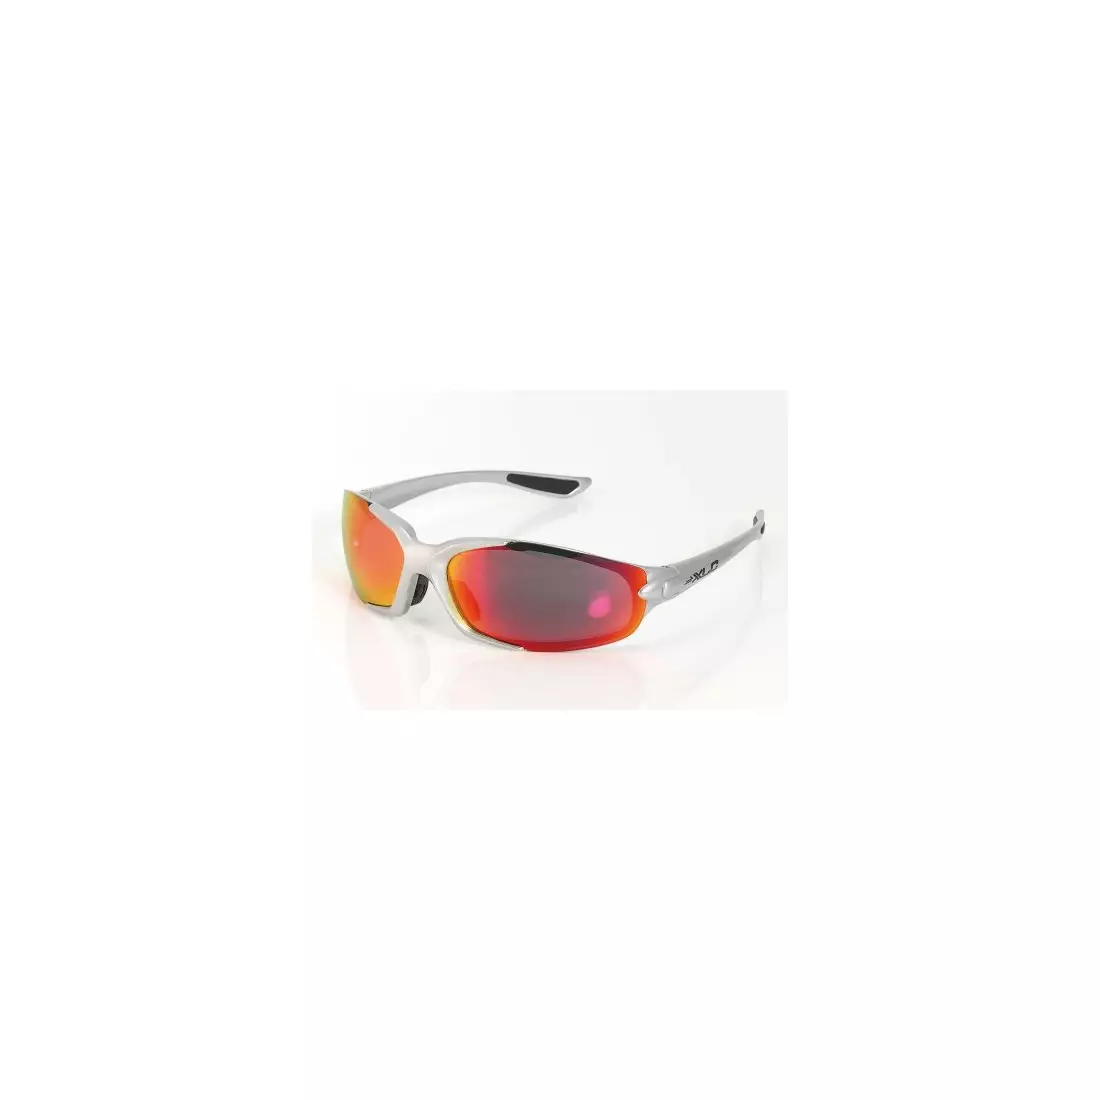 XLC GALAPAGOS - Sportbrille - 156600 - Farbe: Silber